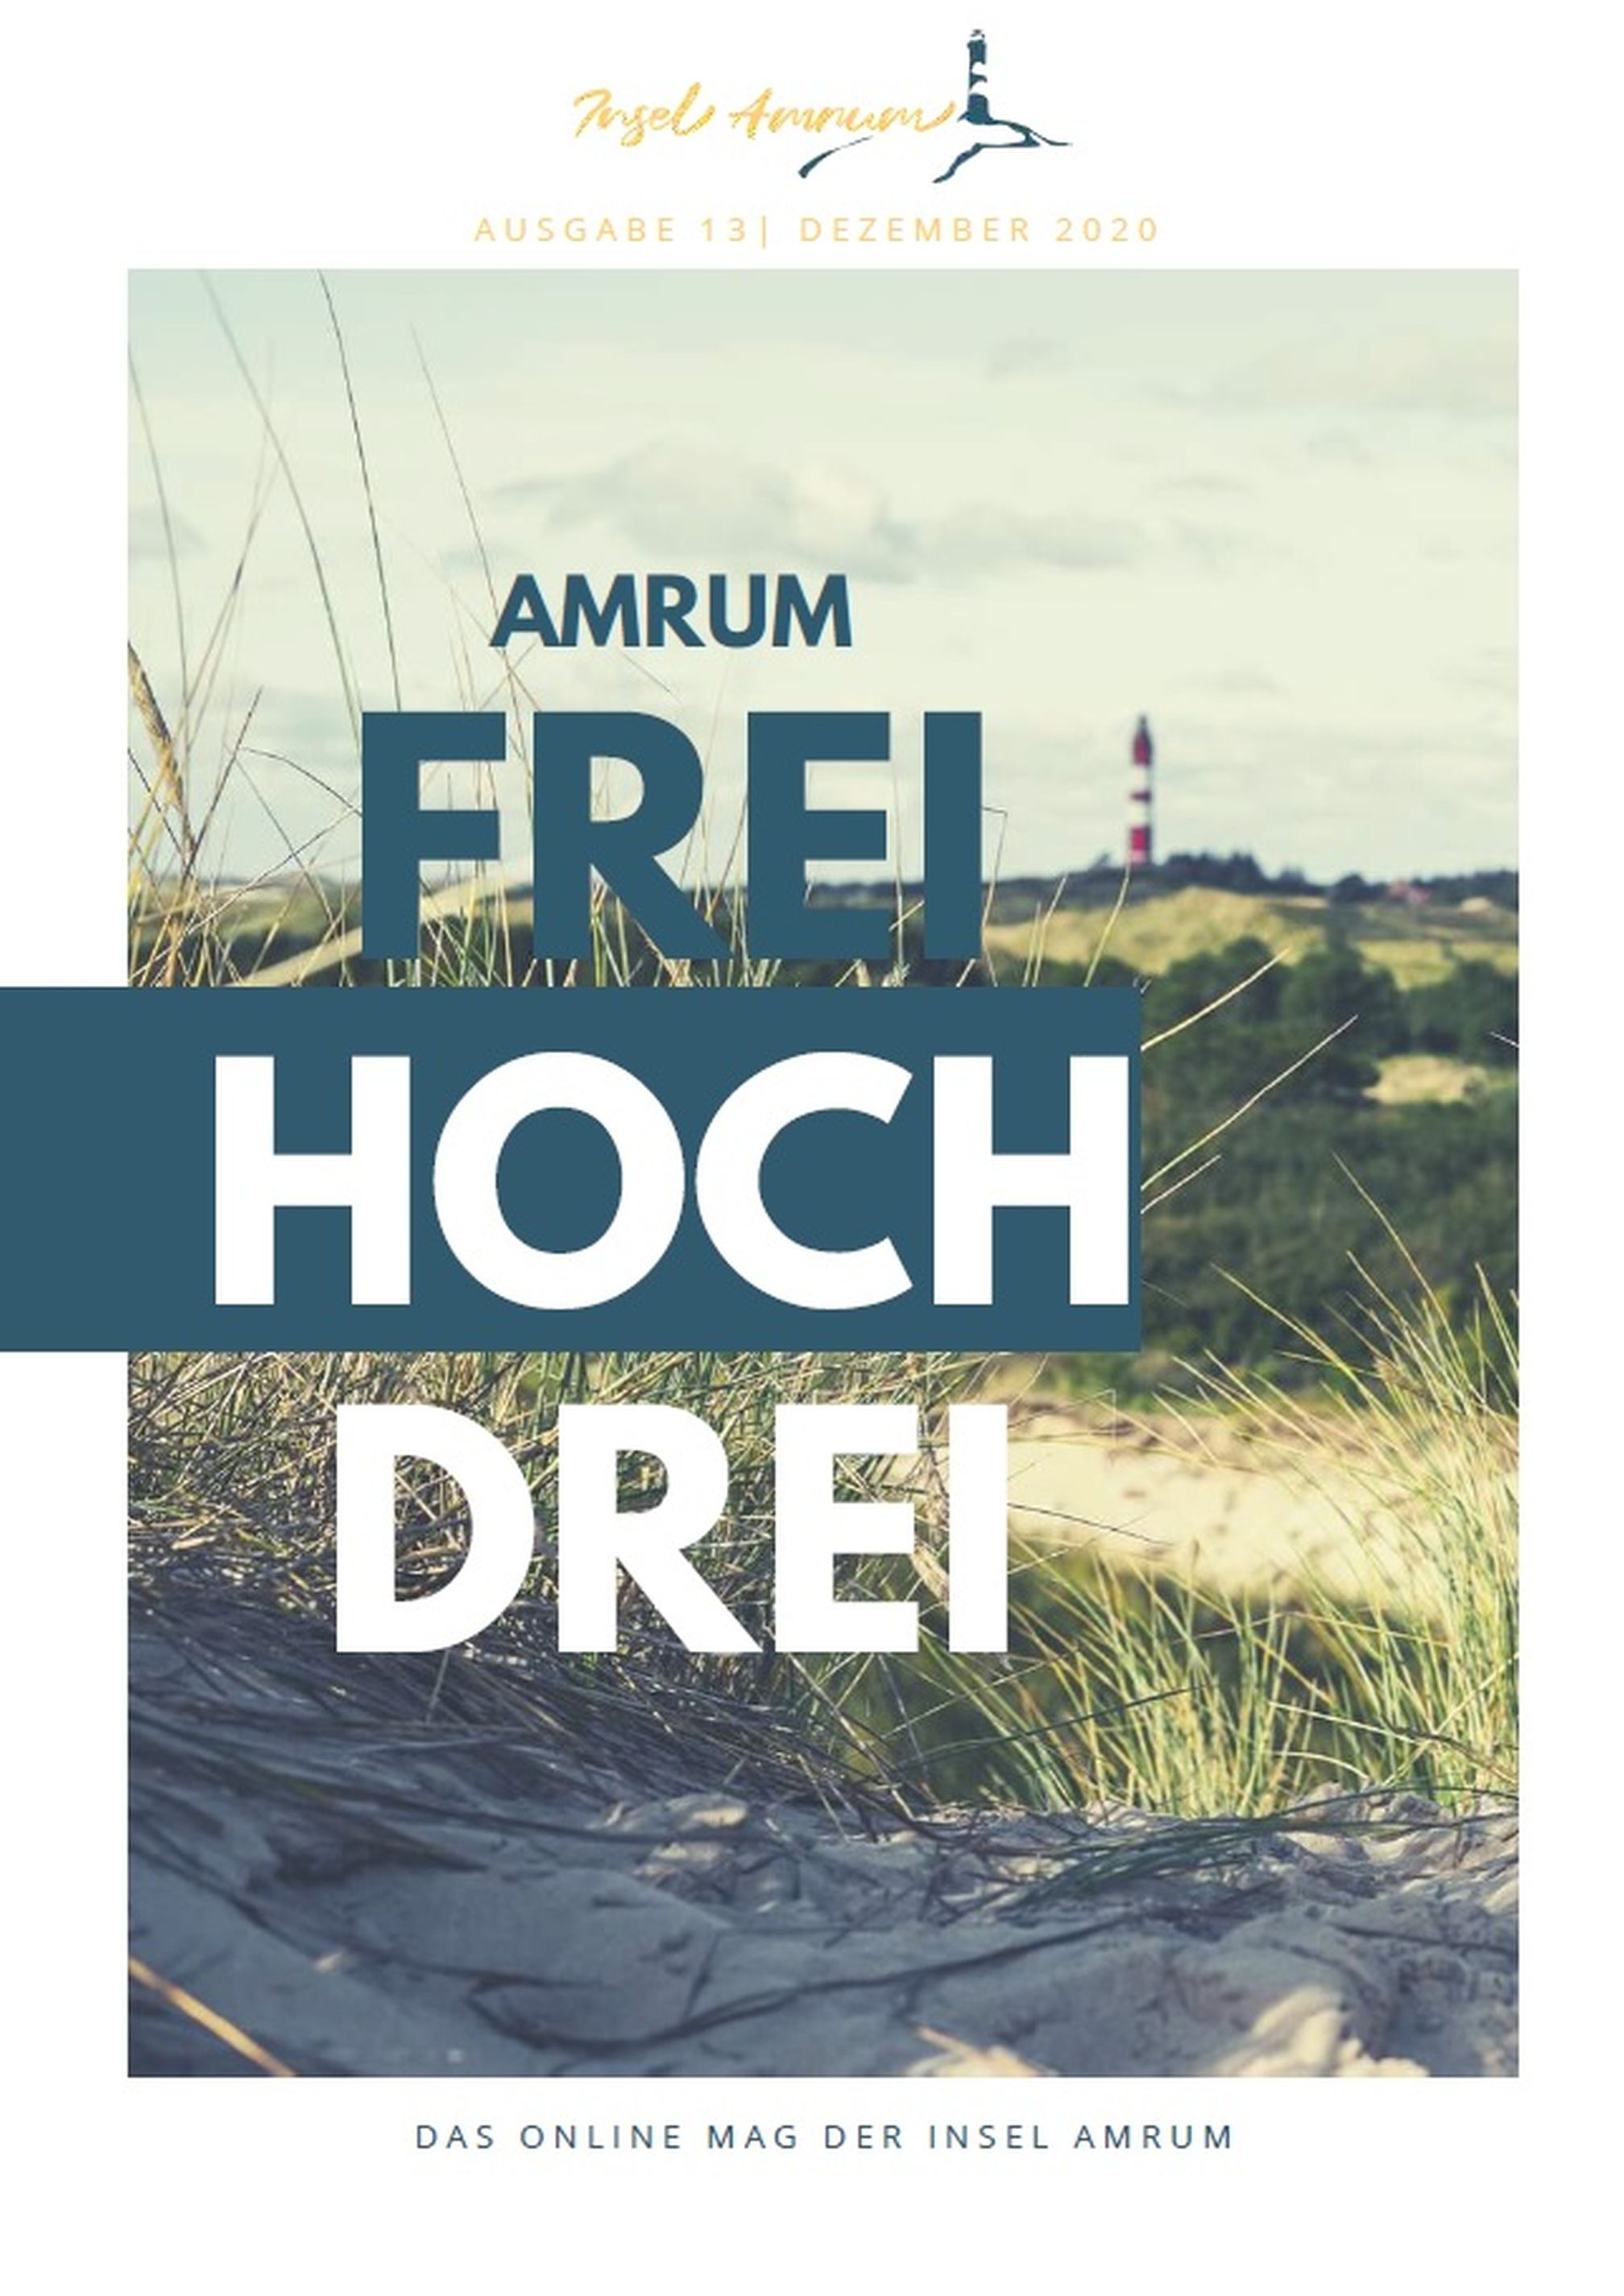 Amrum freihochdrei Online Mag primo PR